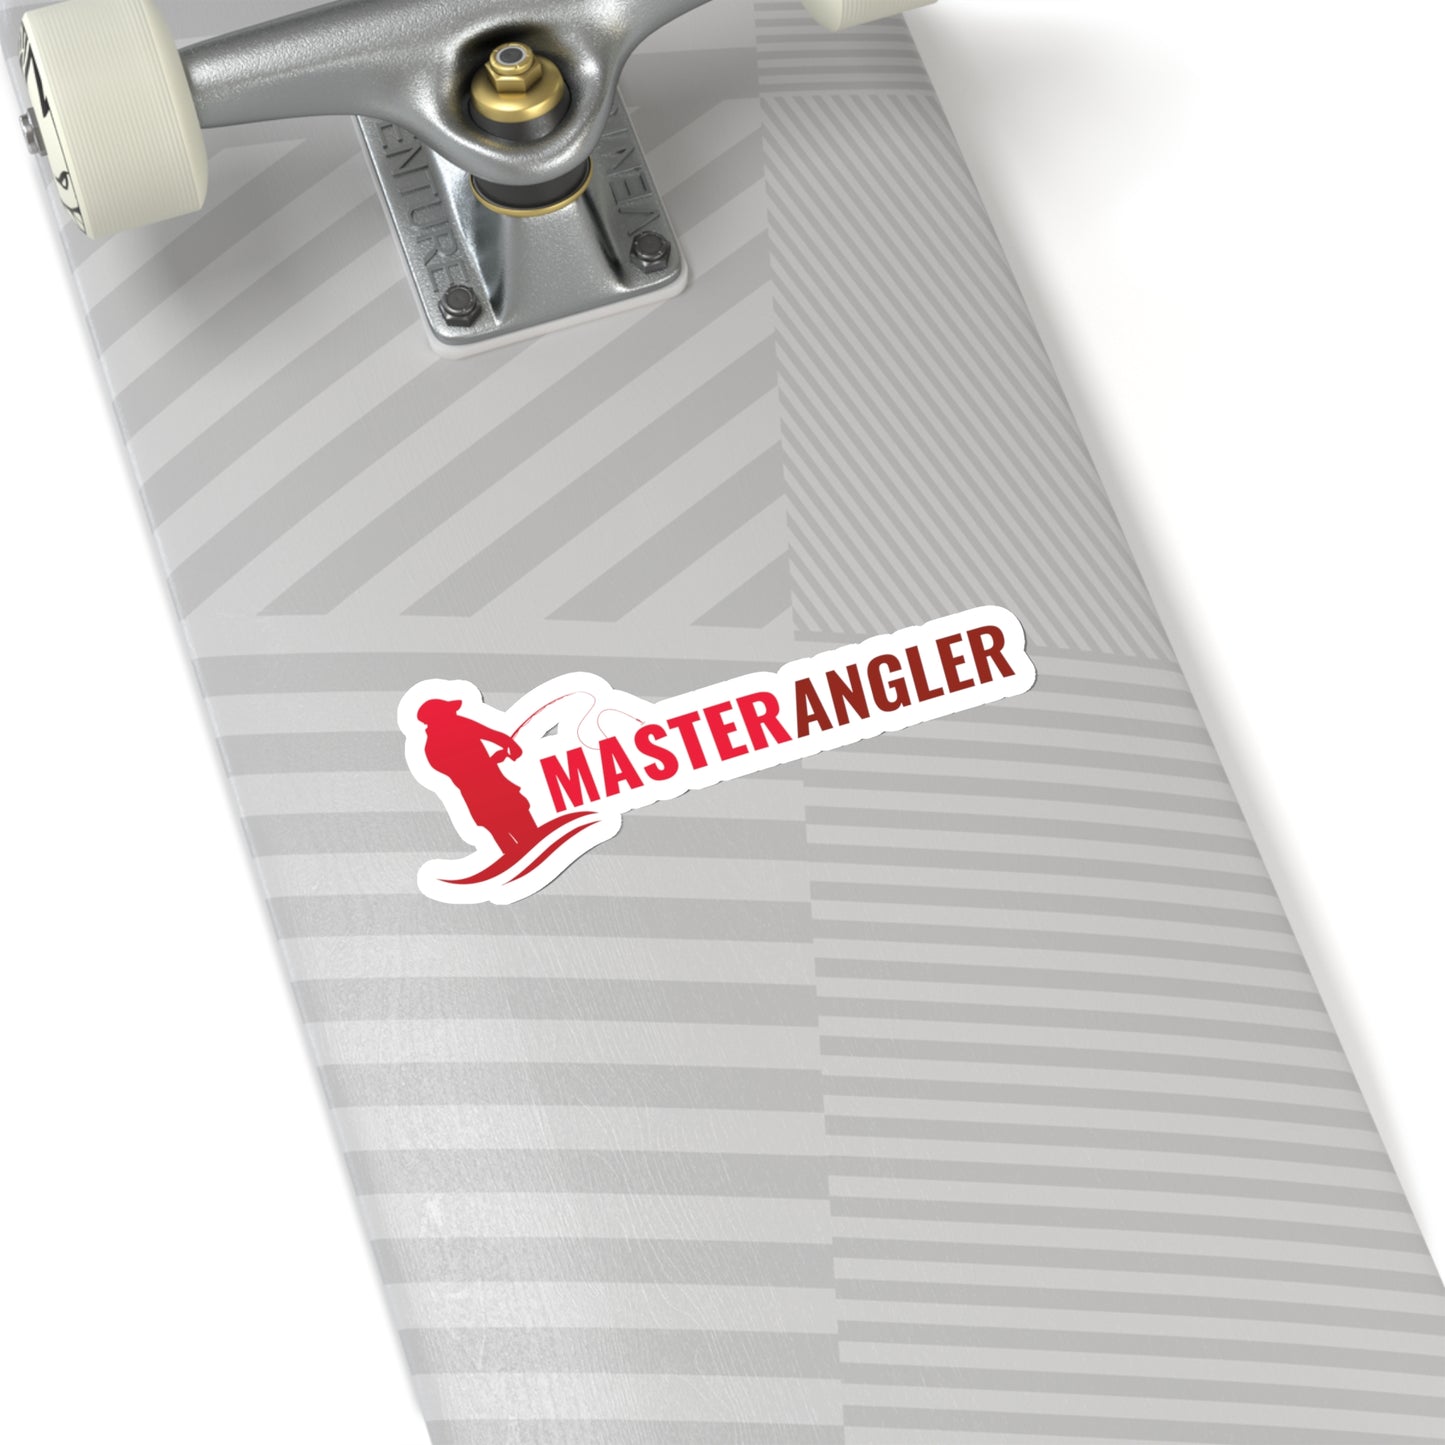 Master Angler Sticker Long - Red